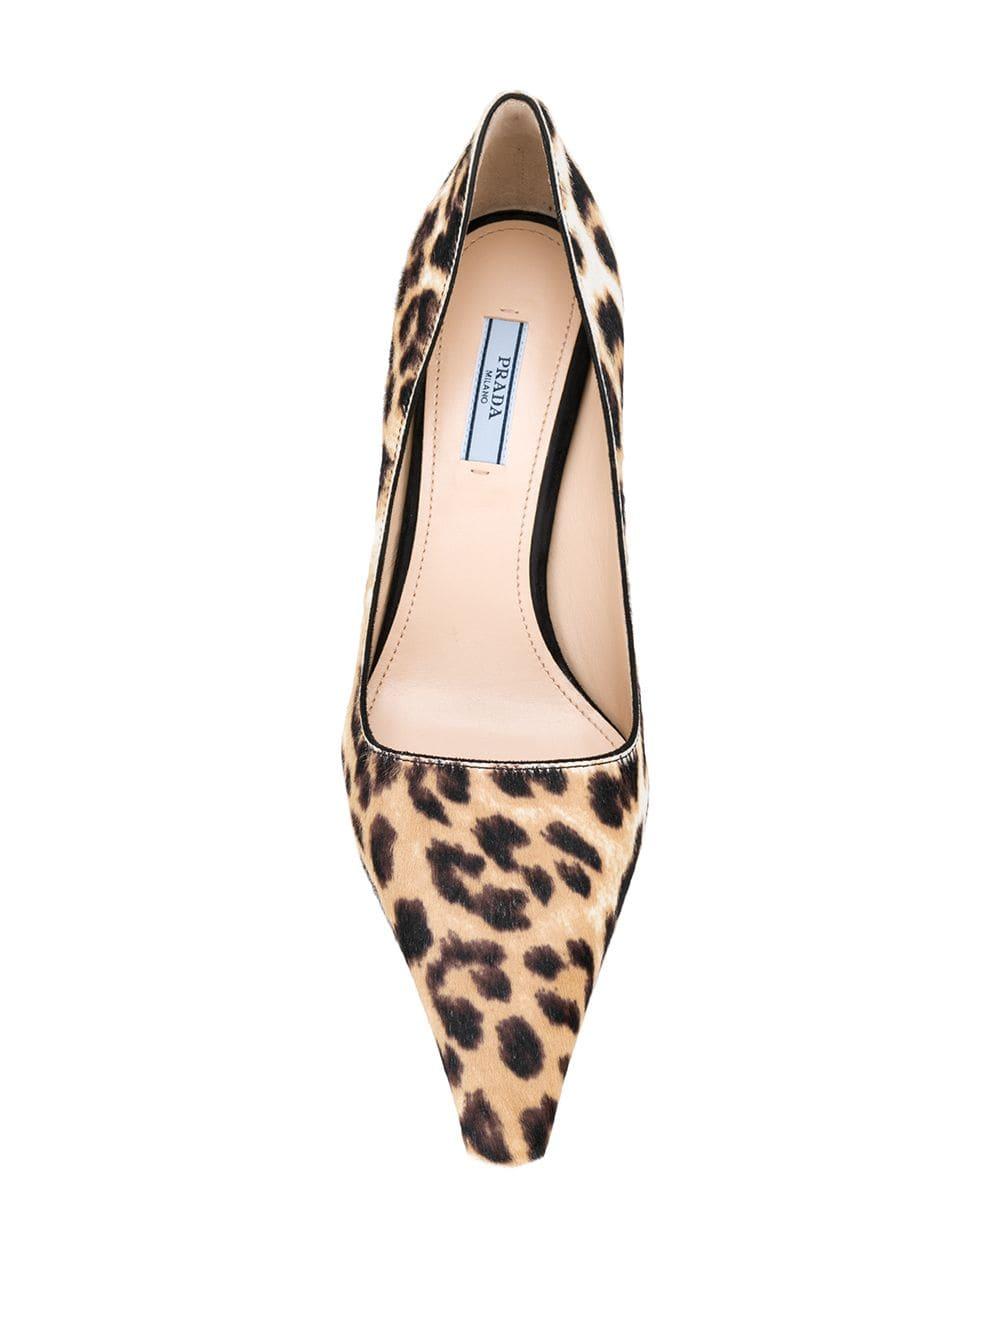 Prada Leather Leopard Print Kitten Heel Pumps - Lyst